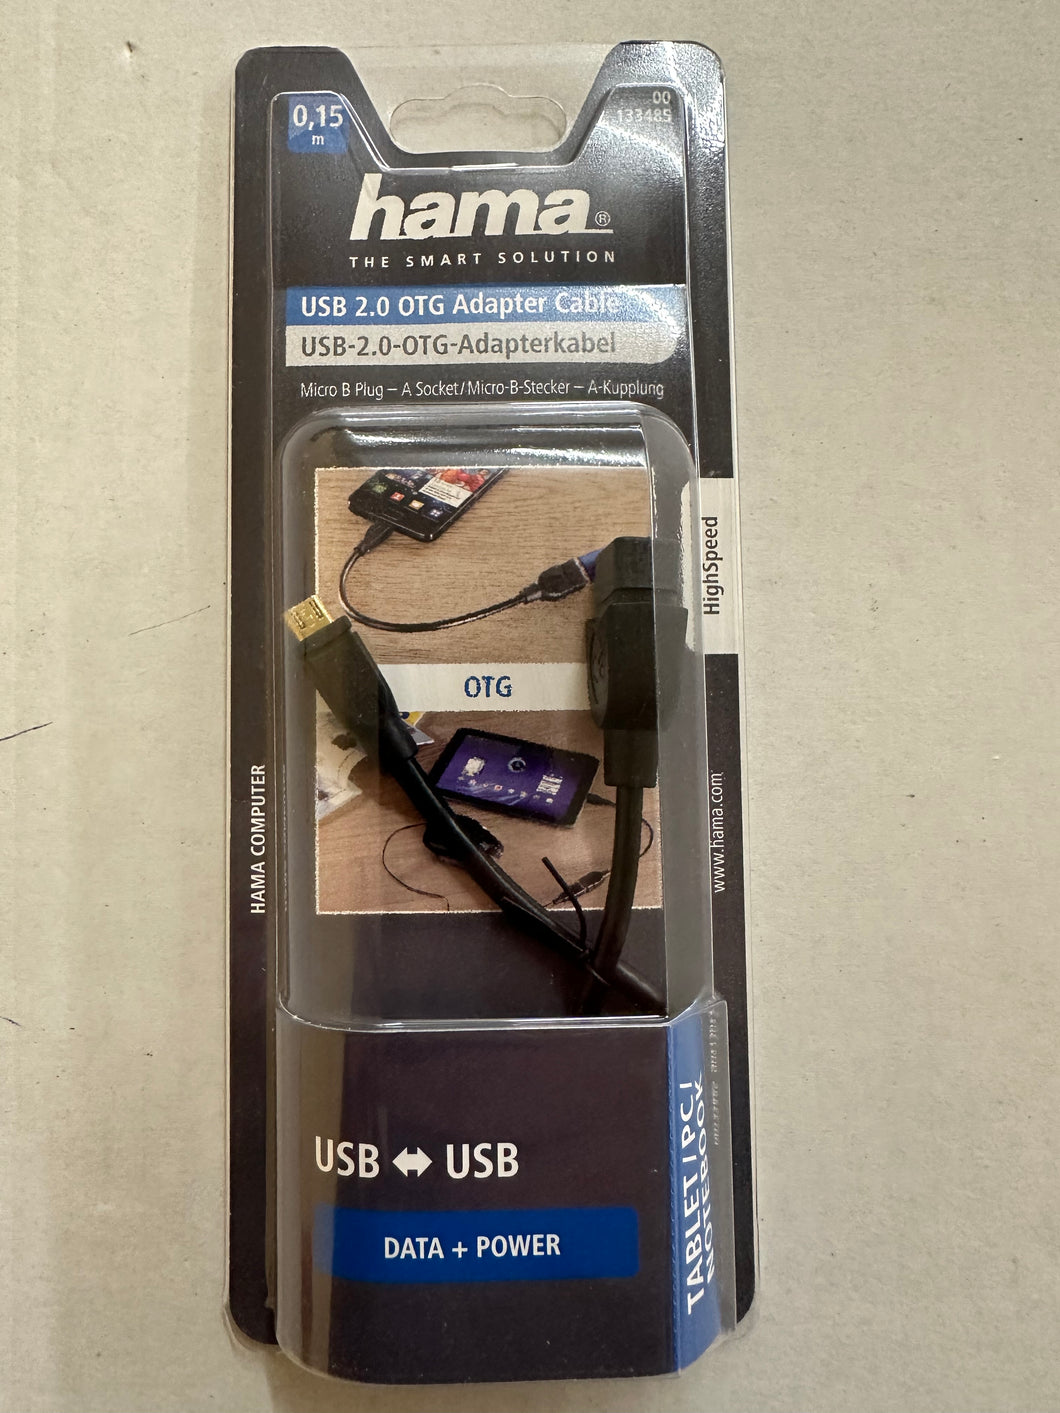 Hama 00133485 USB-2.0-OTG-Adapterkabel Micro-Stecker - A-Kupplung 0,15m (Schwarz)